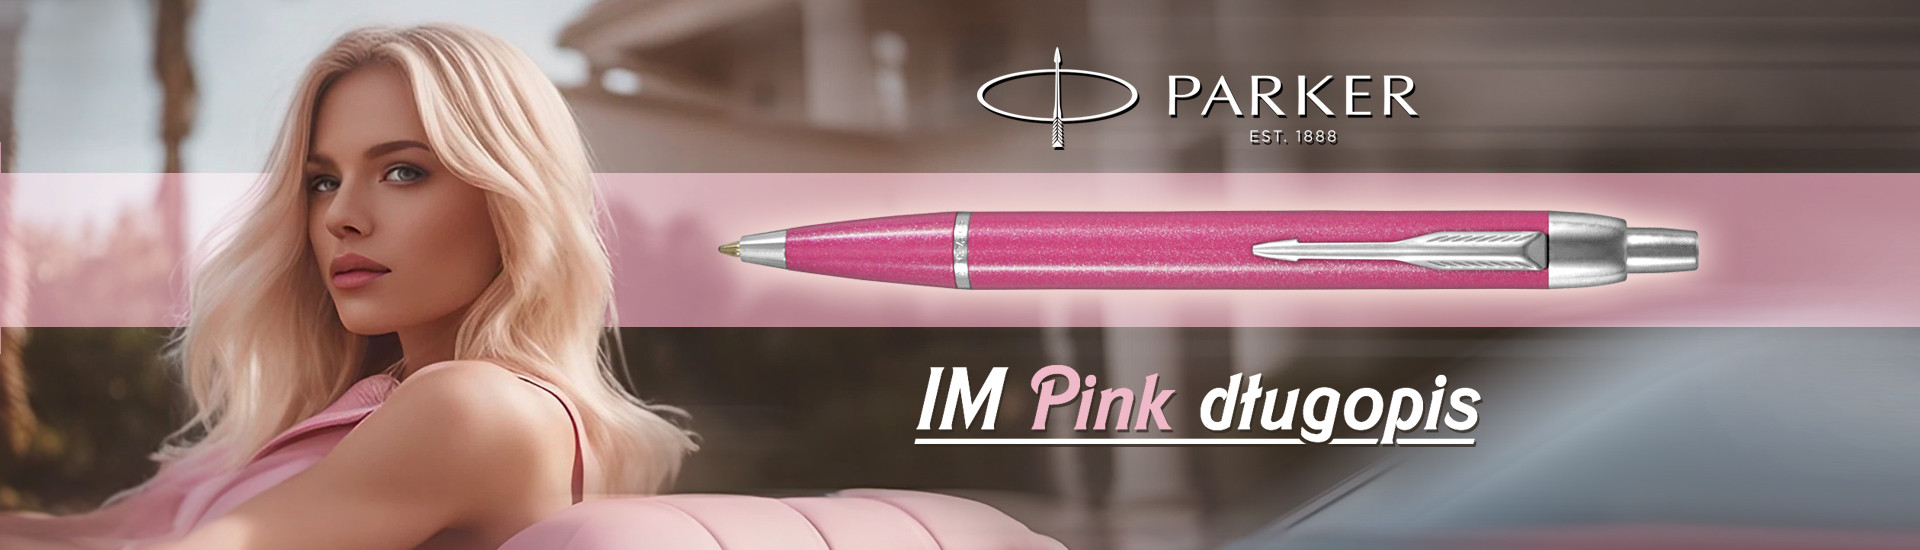 Parker IM Pink BARBIE style!